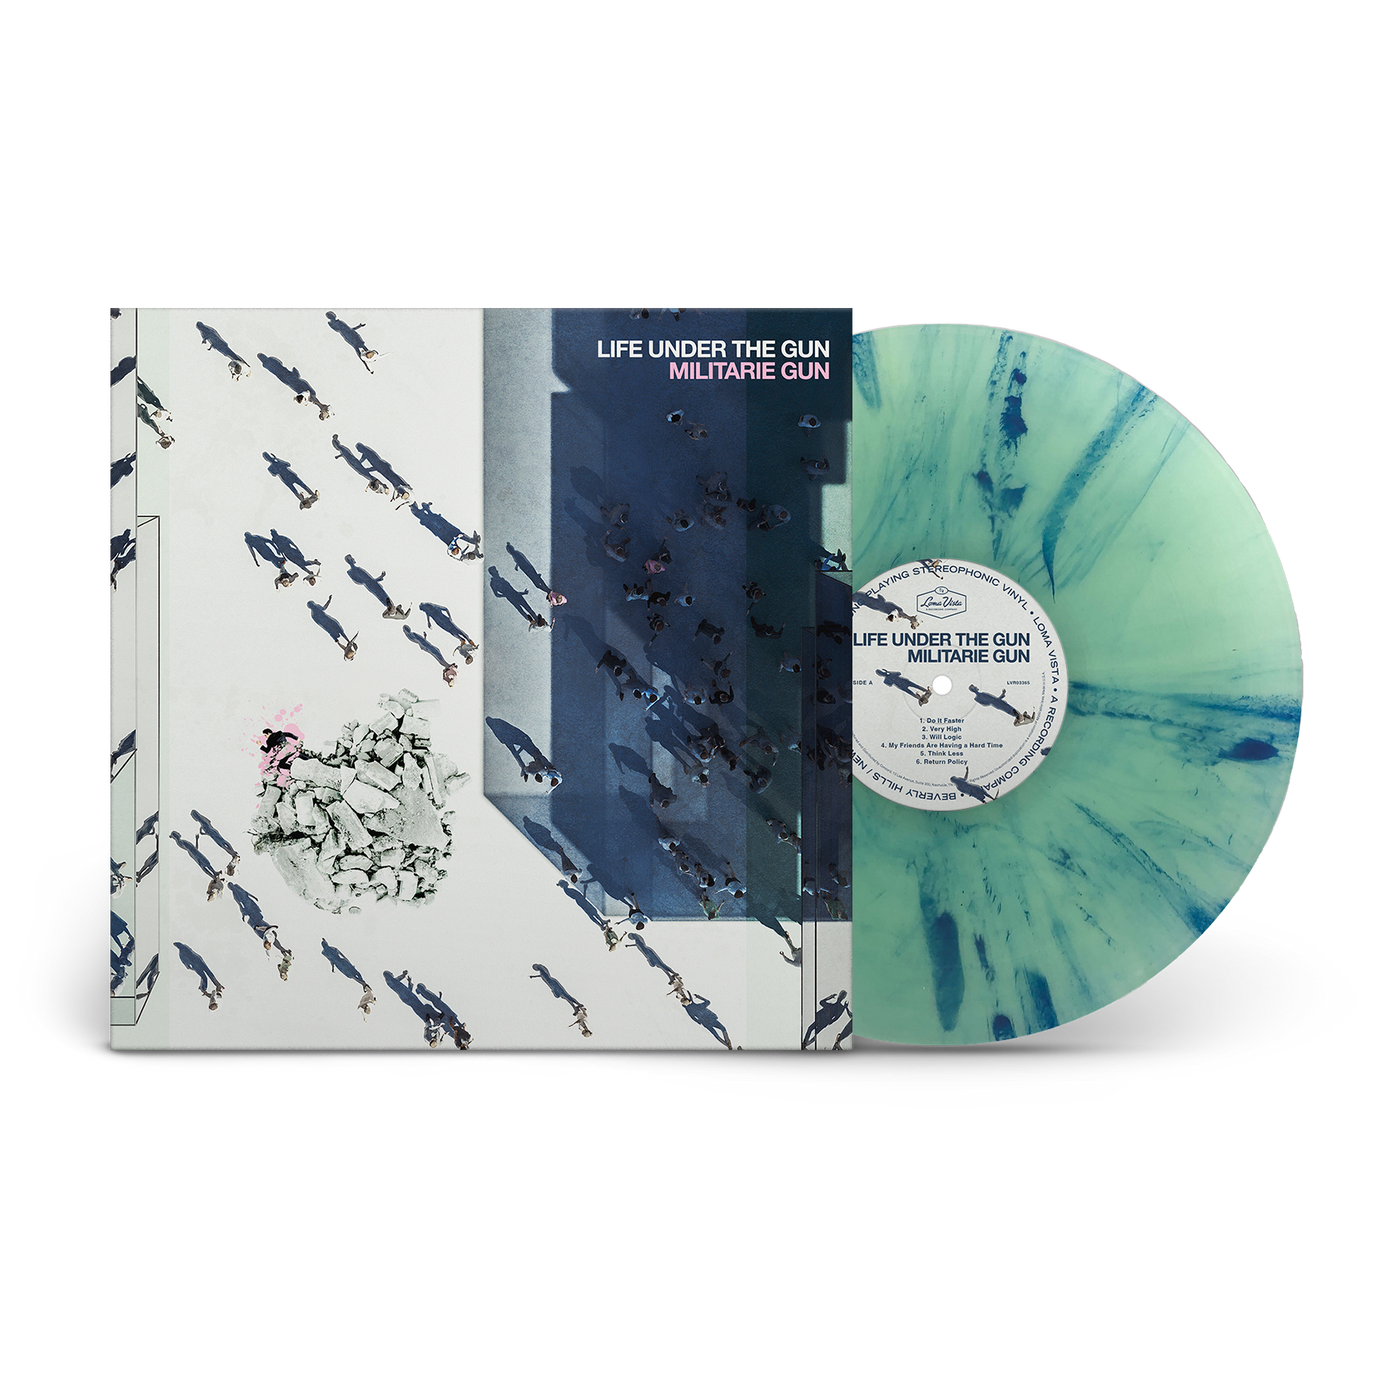 Life Under the Gun Limited Edition "Green With Blue Splatter" Vinyl